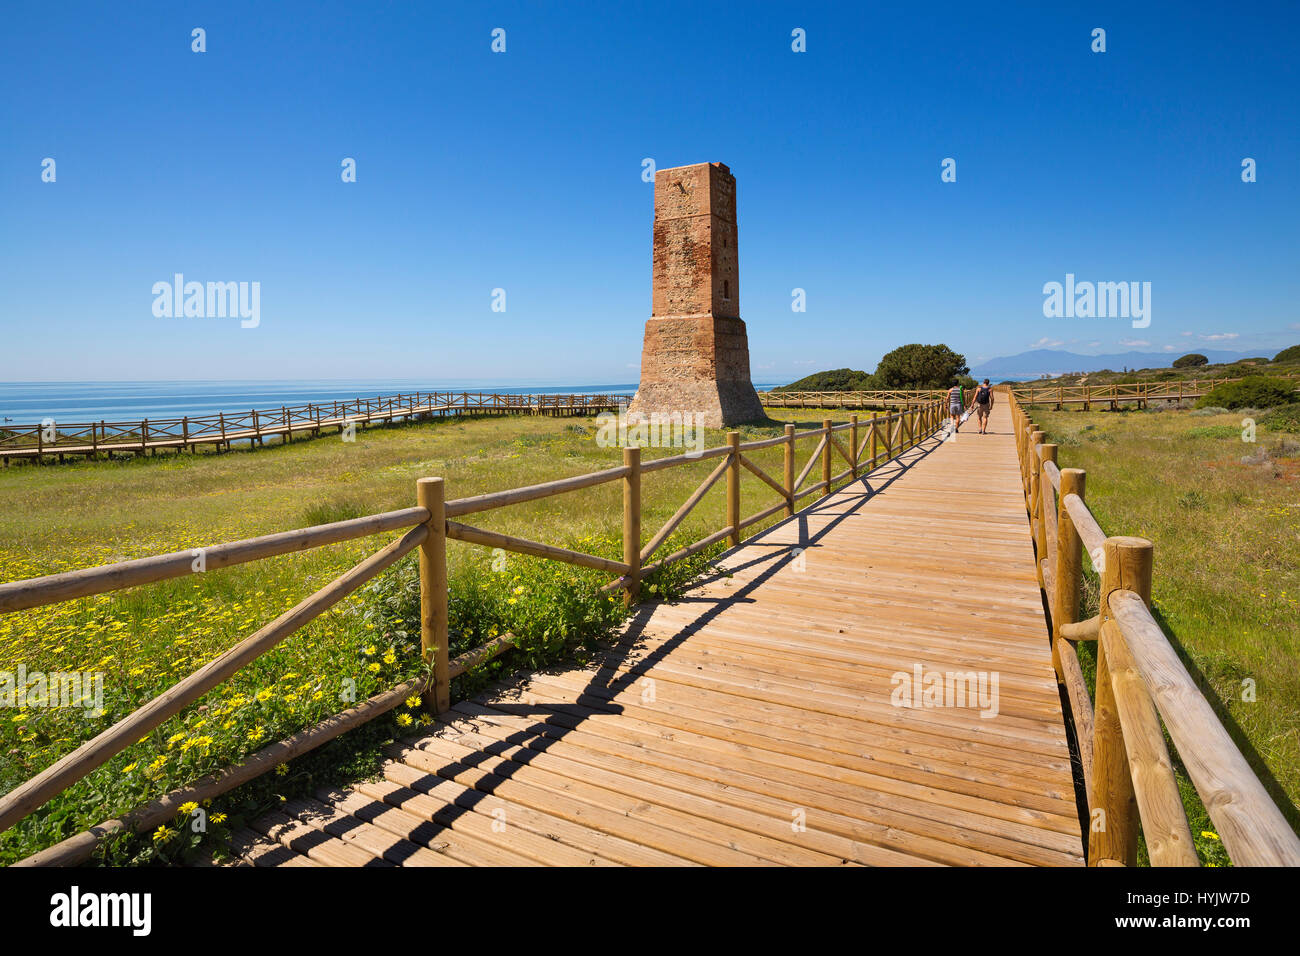 Los Ladrones moorish tower, wooden footpath, Natural Monument Dunas de Artola o Cabopino, Marbella. Malaga province Costa del Sol. Andalusia Southern  Stock Photo